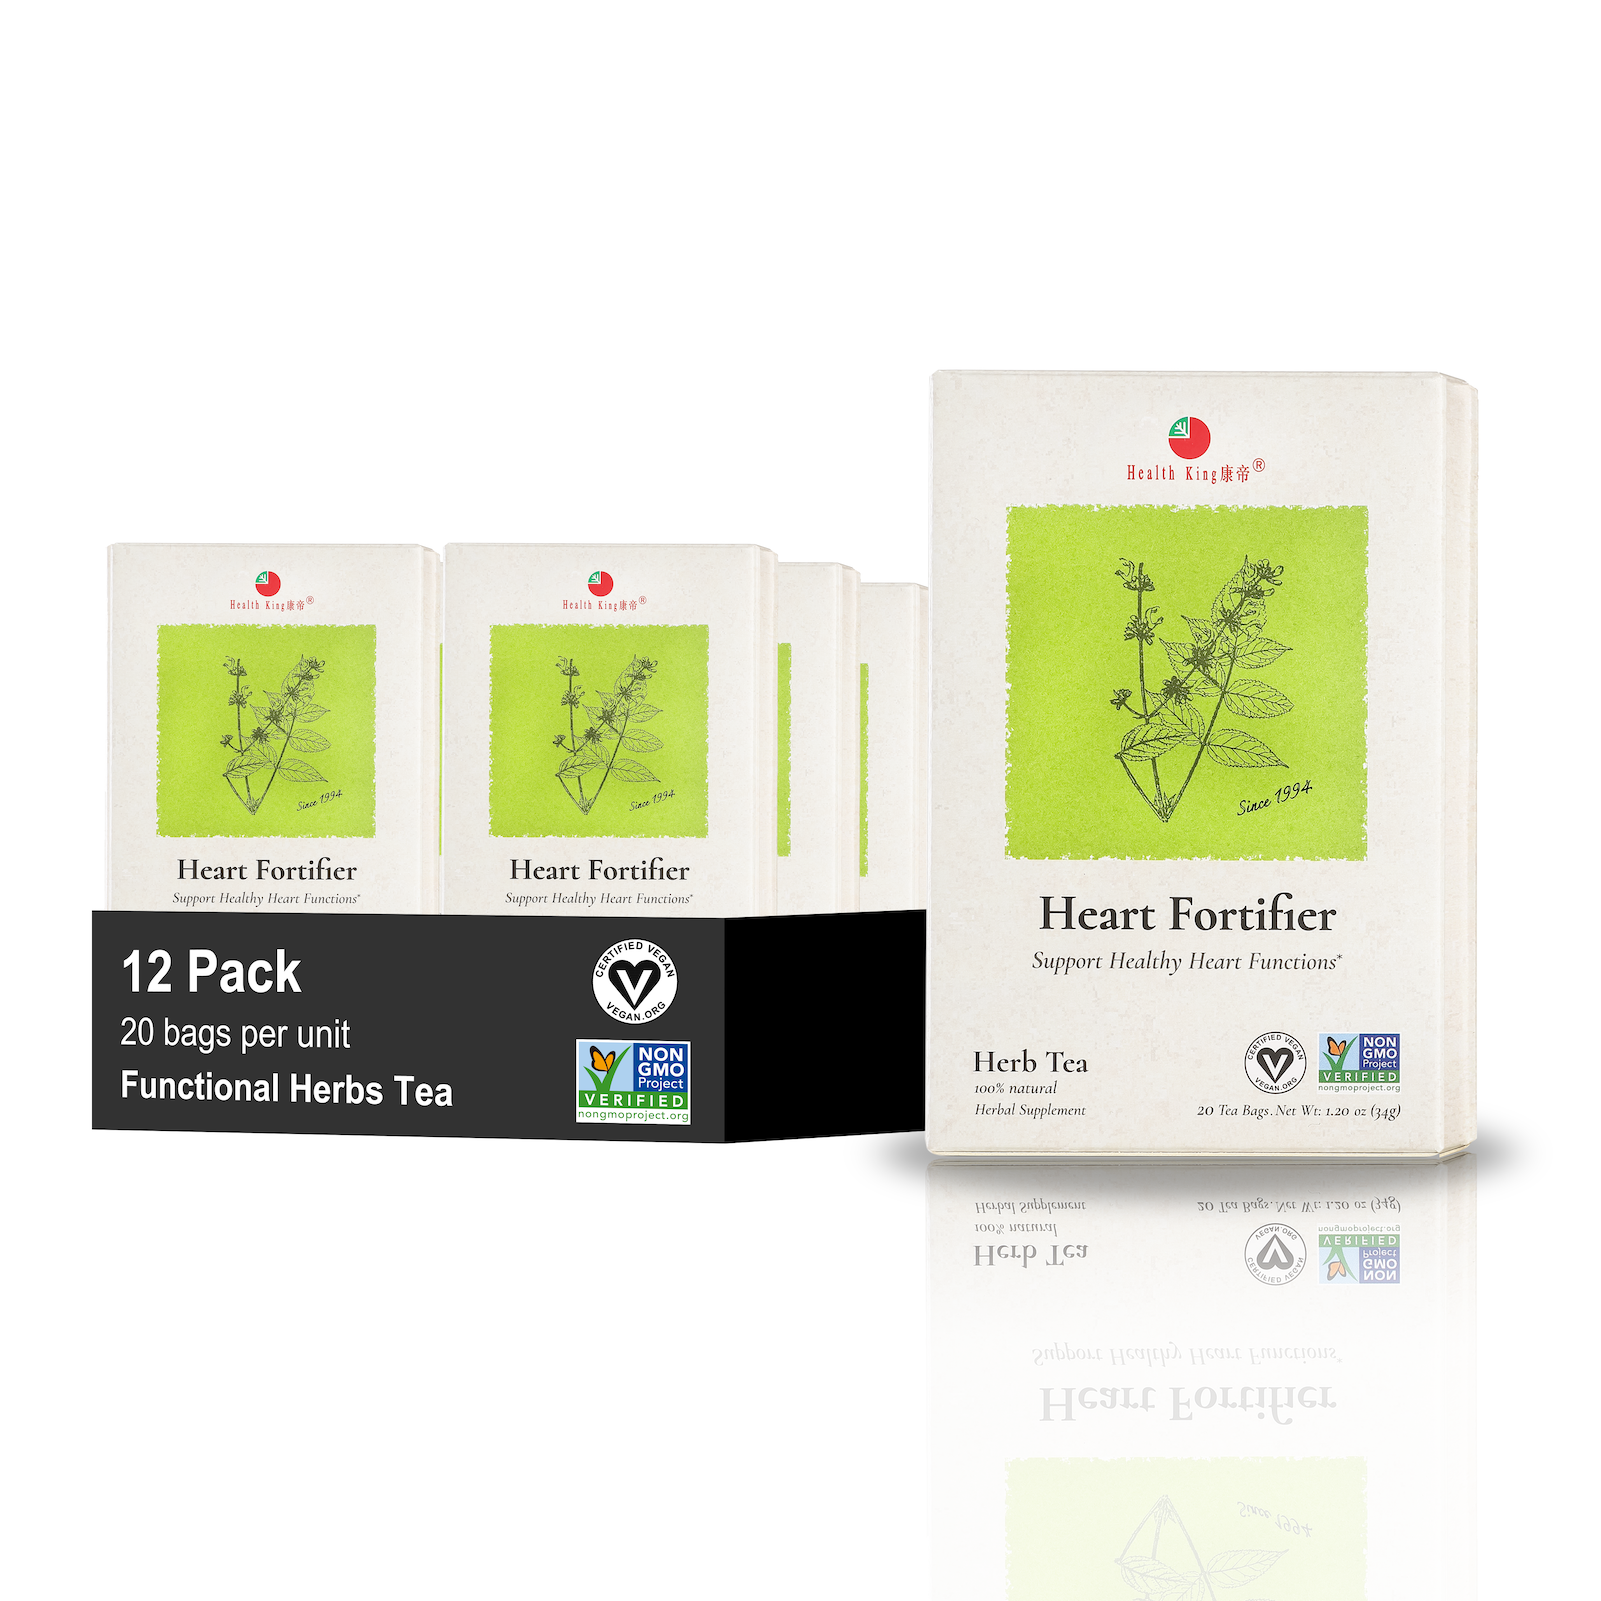 Twelve-pack of Heart Fortifier Organic Tea promoting heart function